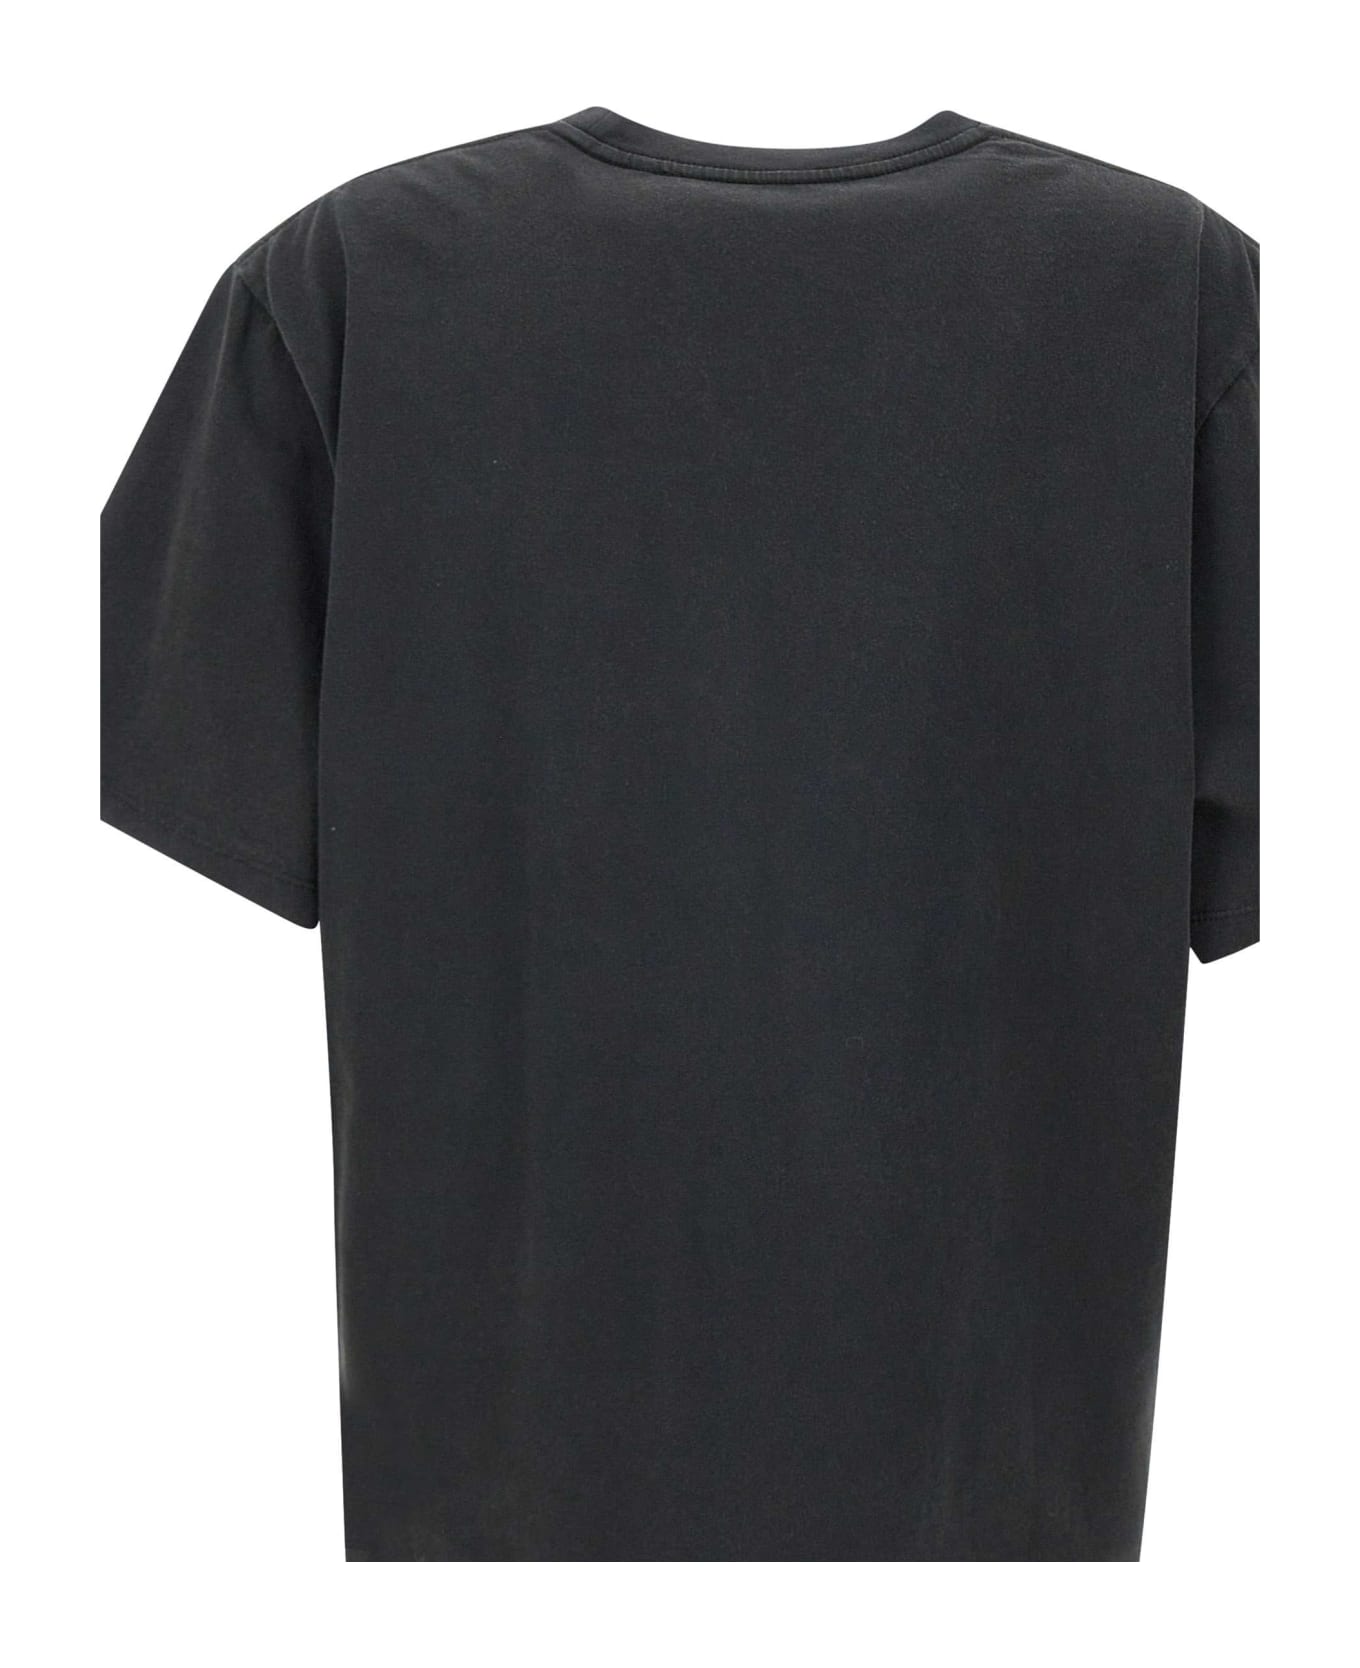 Rotate by Birger Christensen "enzyme" Cotton T-shirt - GREY Tシャツ